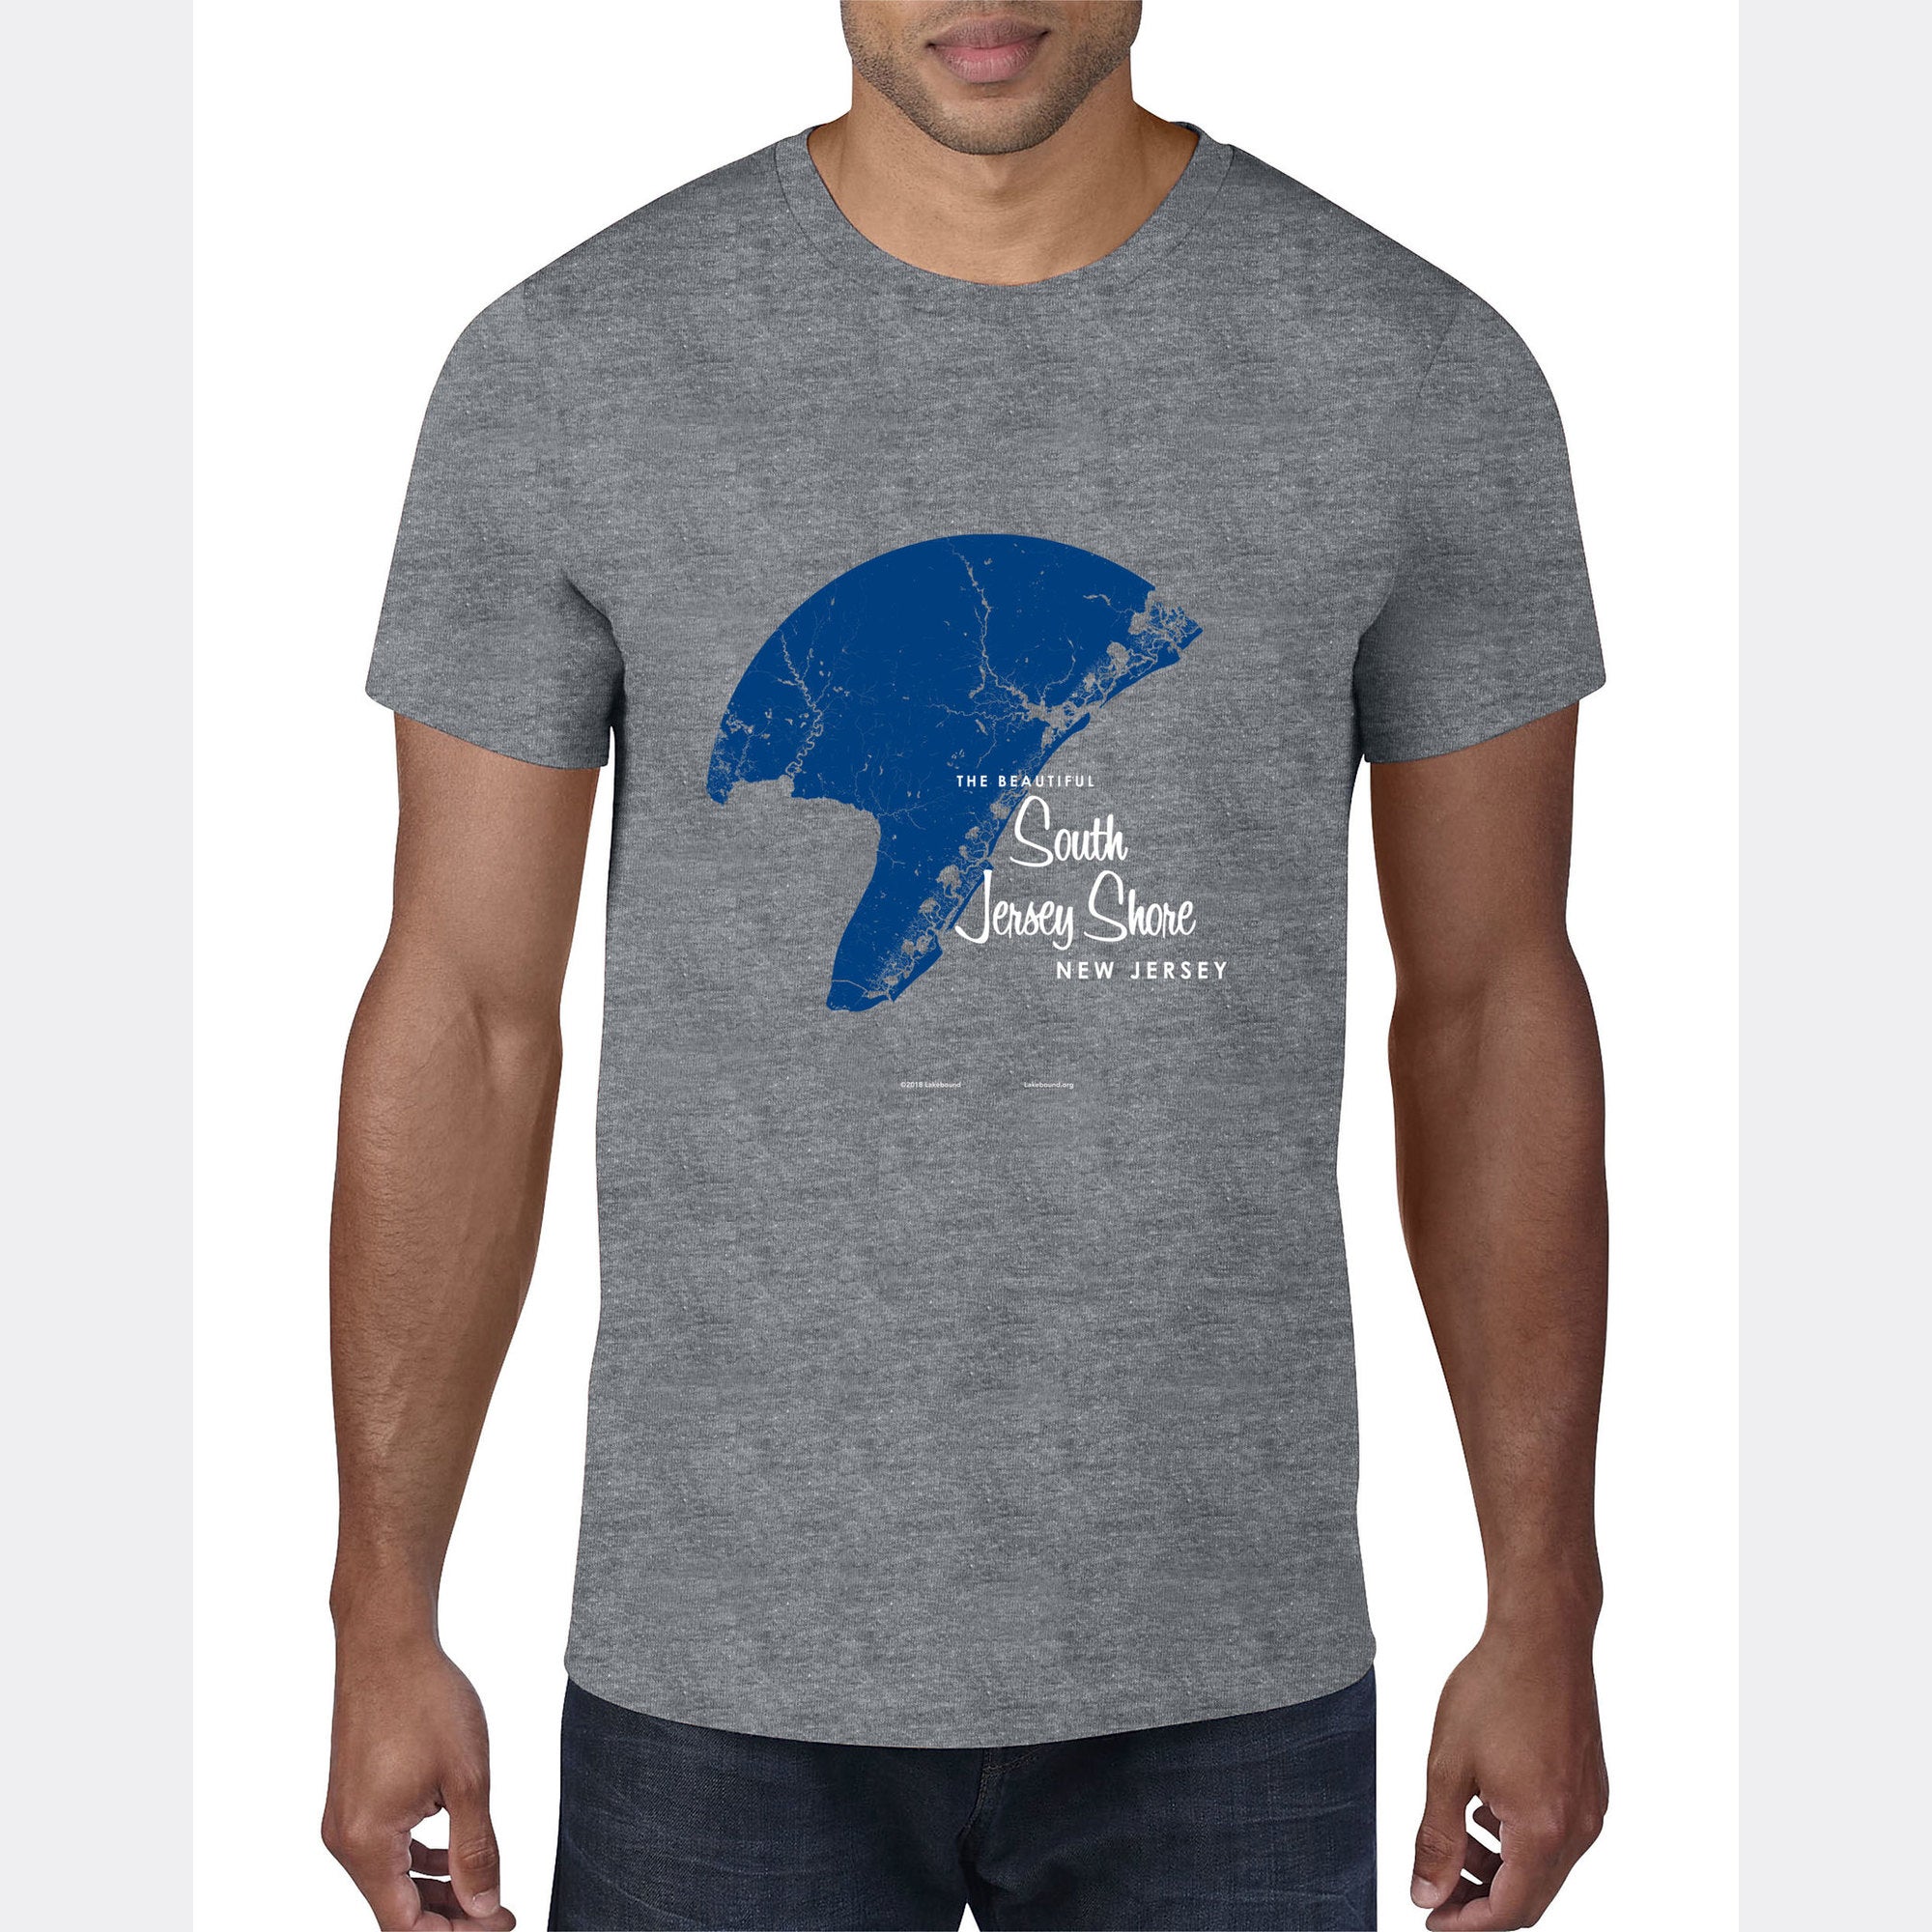 South Jersey Shore New Jersey, T-Shirt